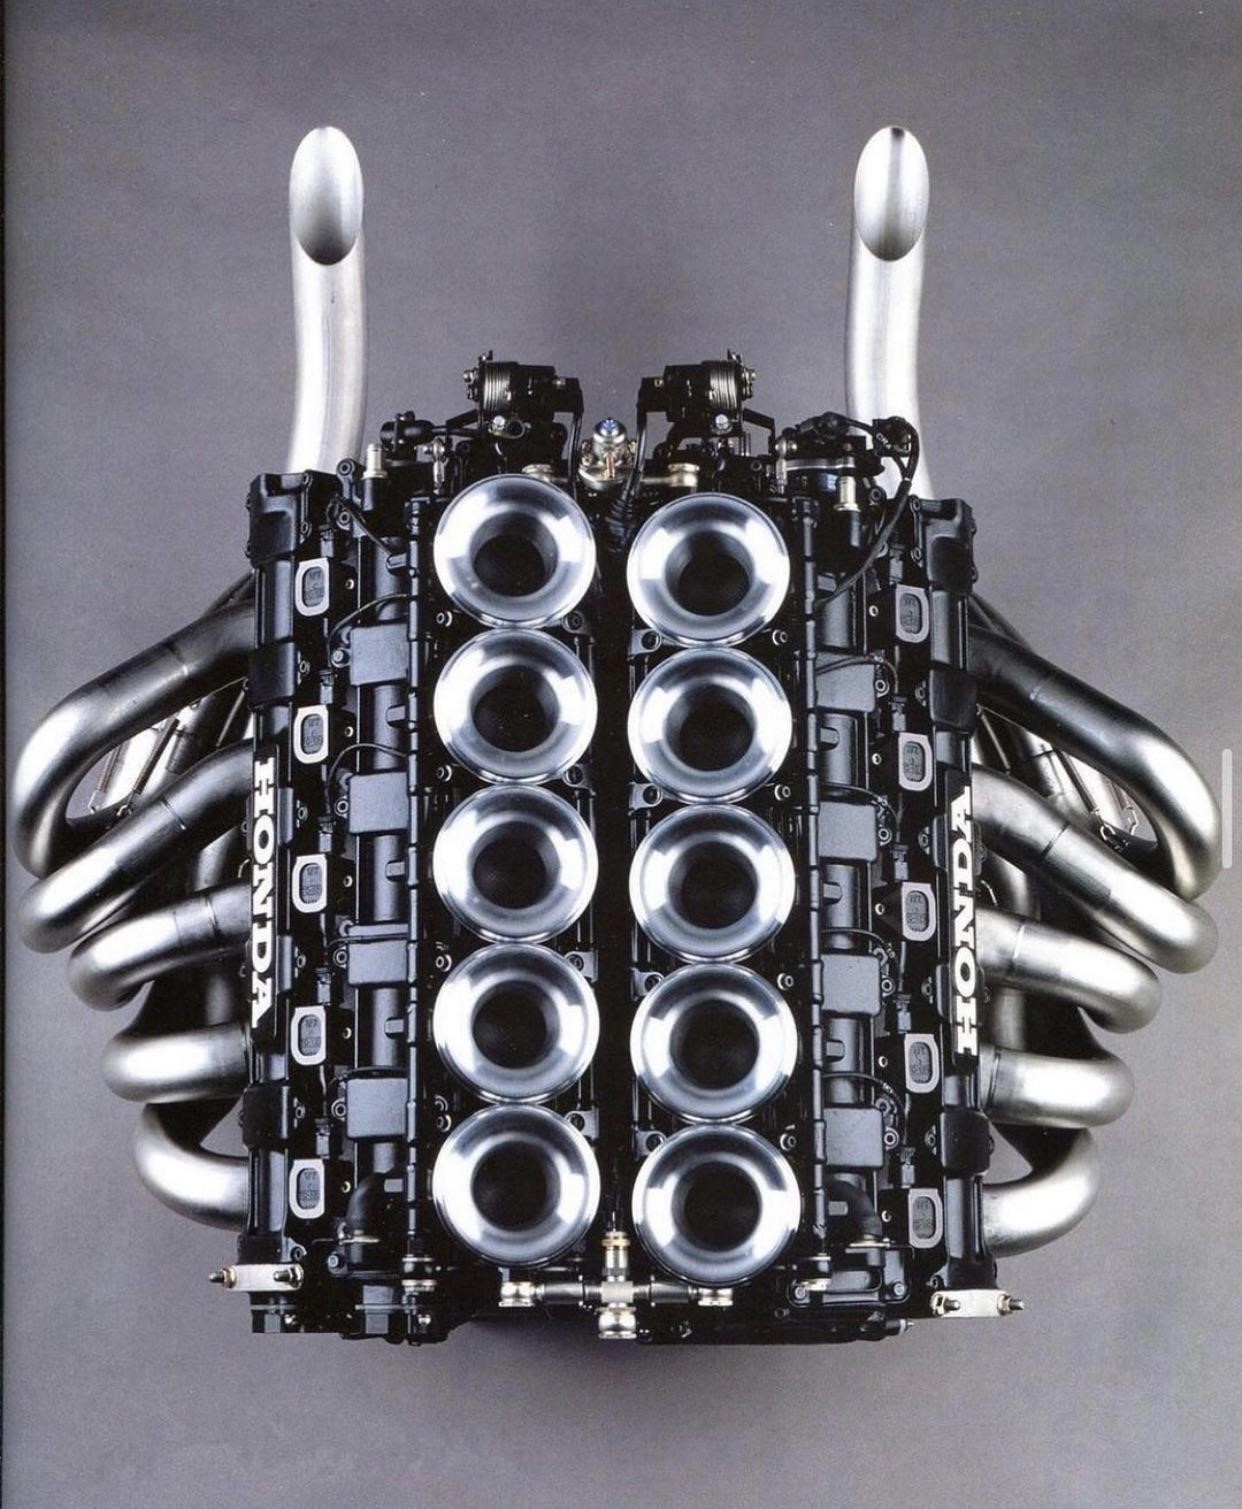 Honda F1 V10 engine, absolute beauty.